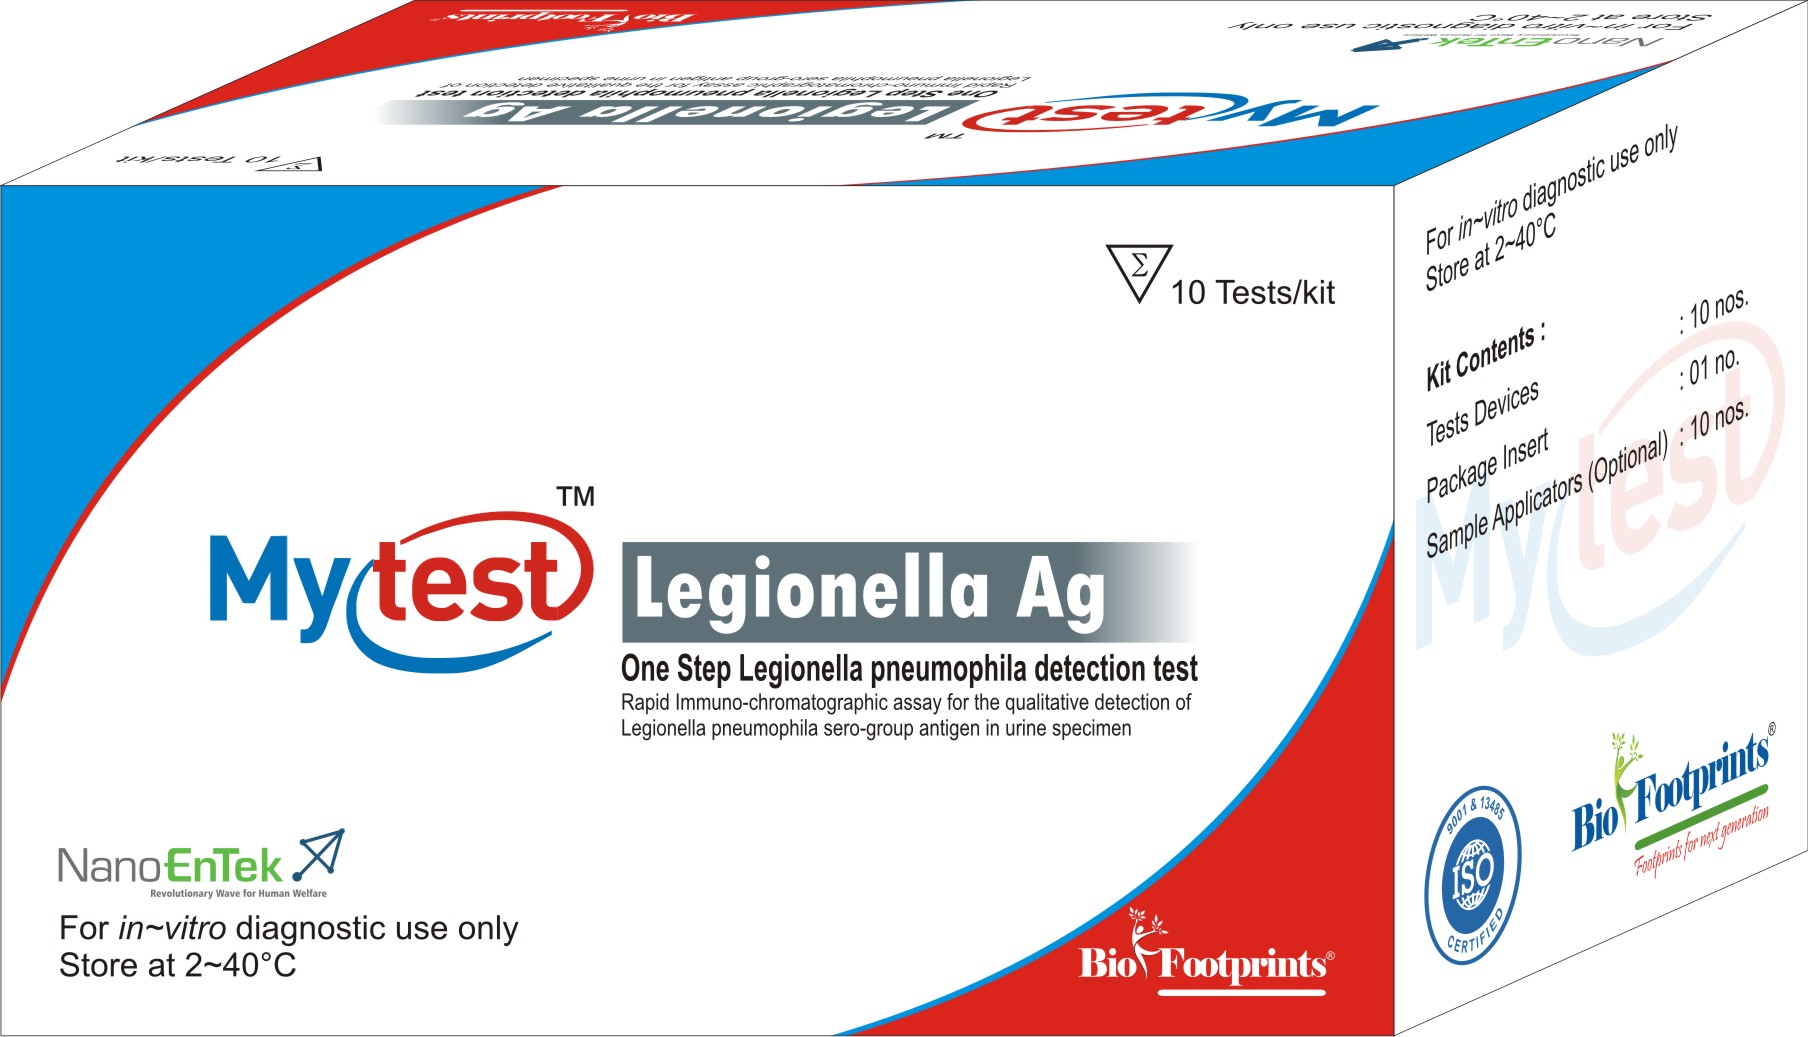 Mytest Legionella Ag